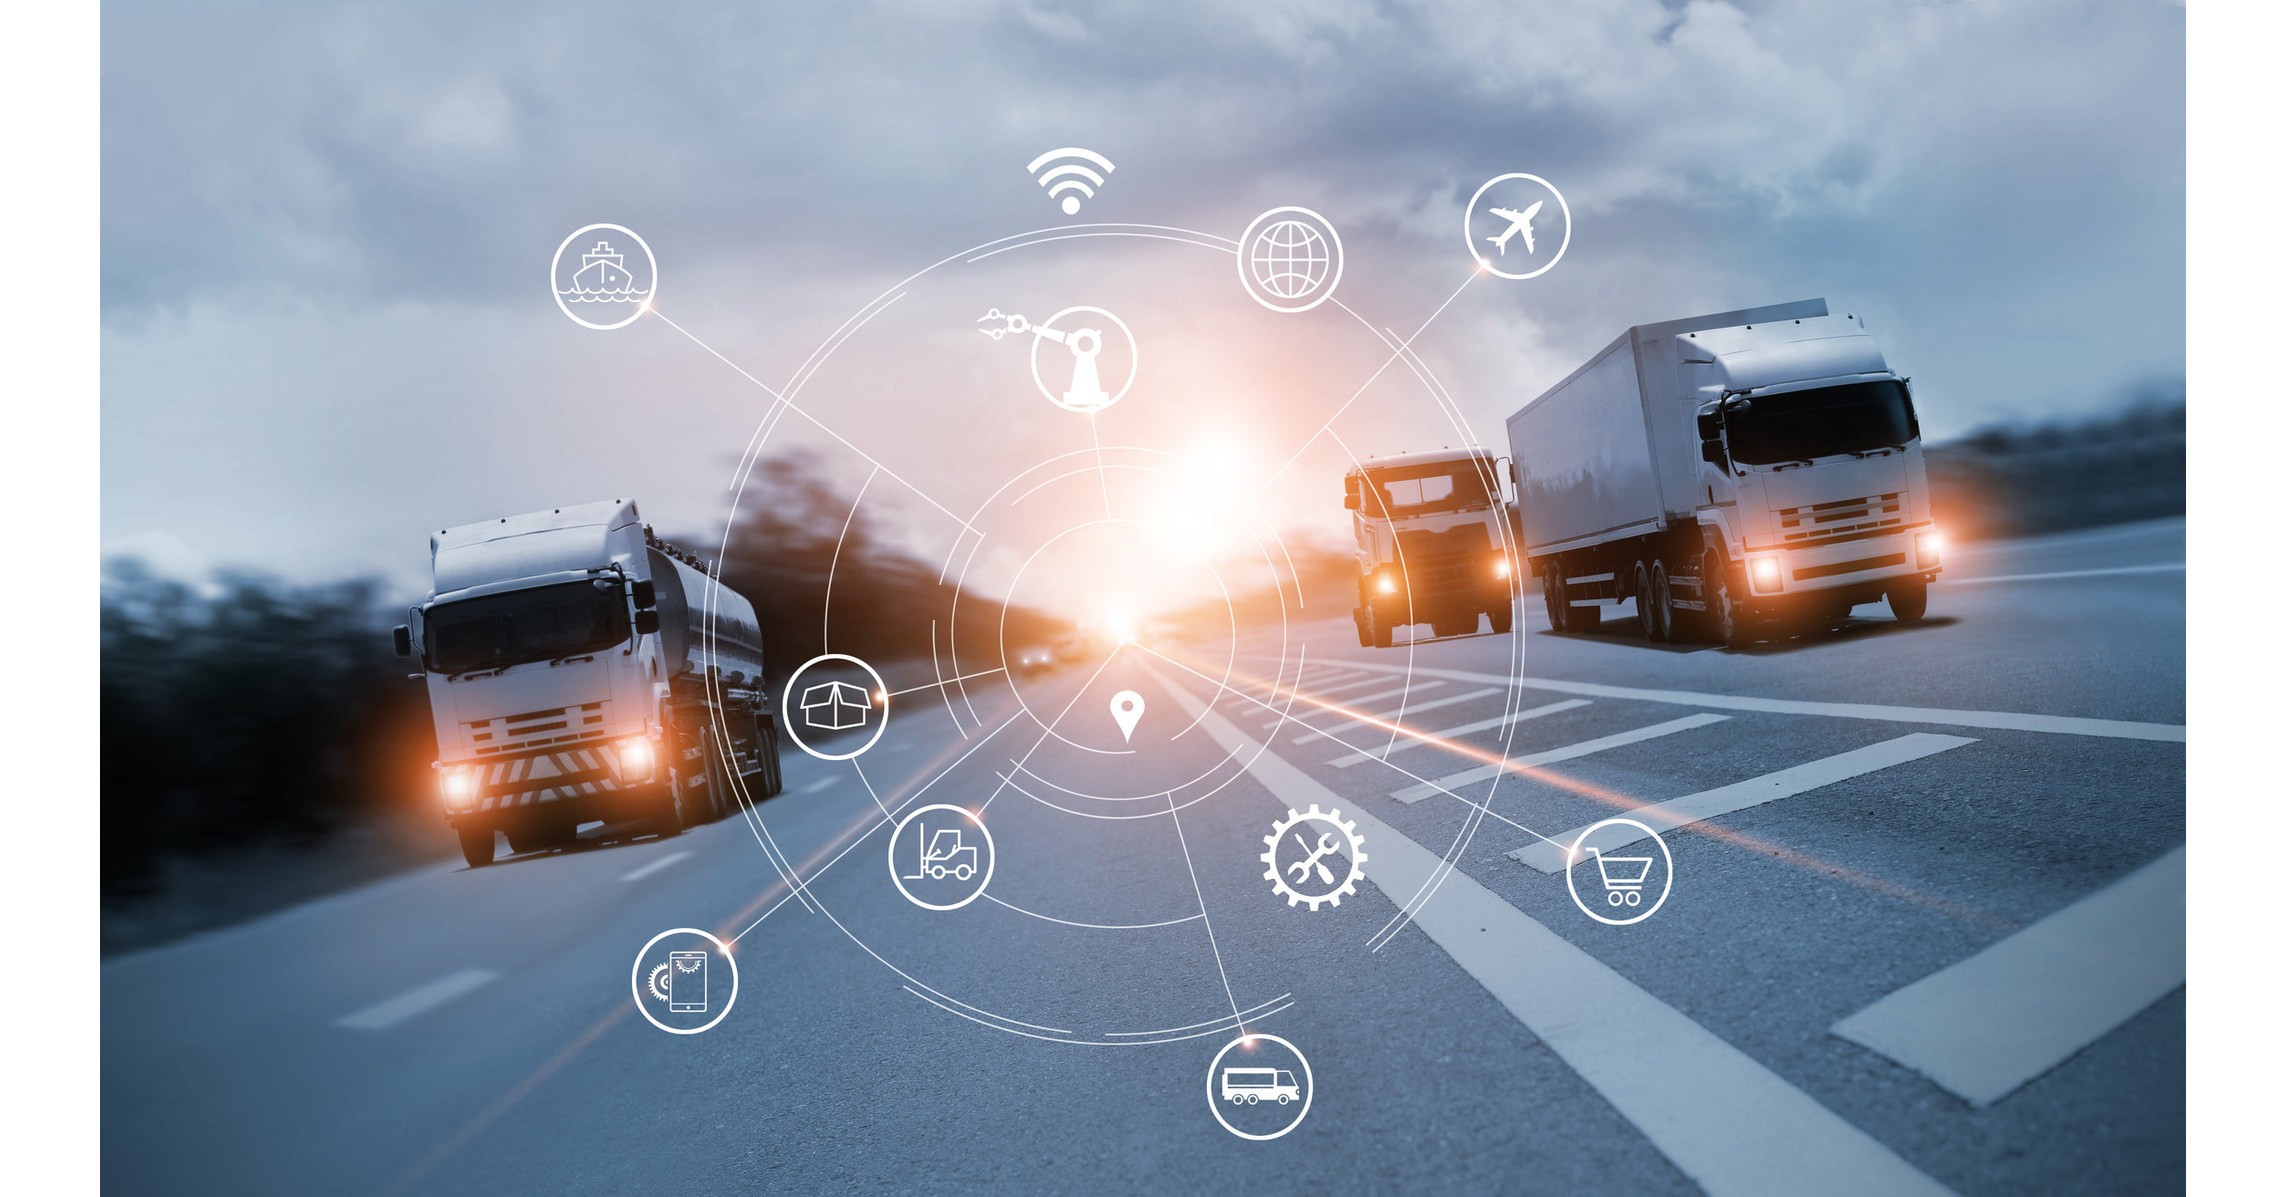 Illusdtration of connected trucks telematics